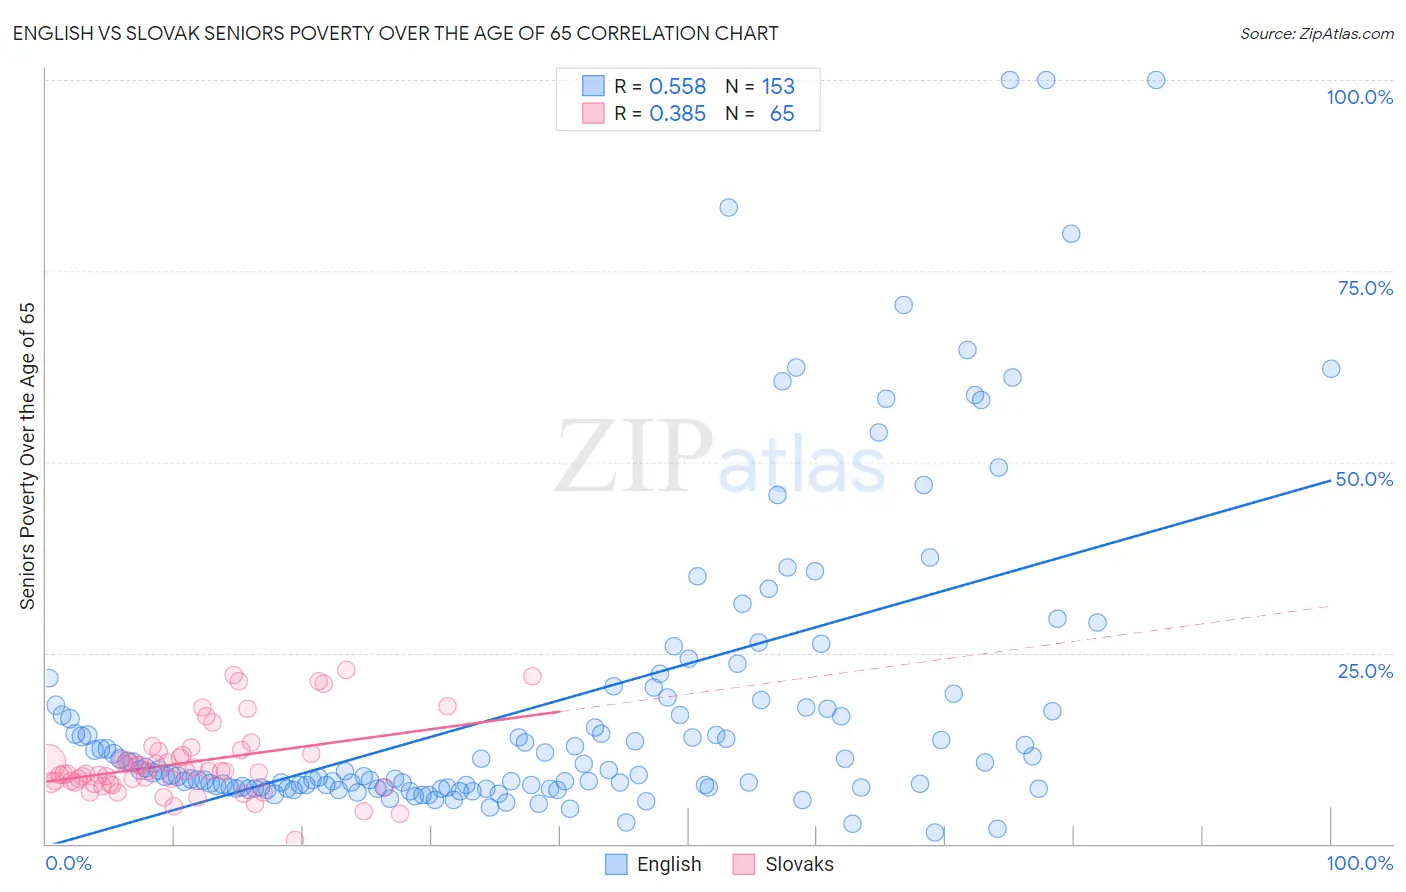 English vs Slovak Seniors Poverty Over the Age of 65